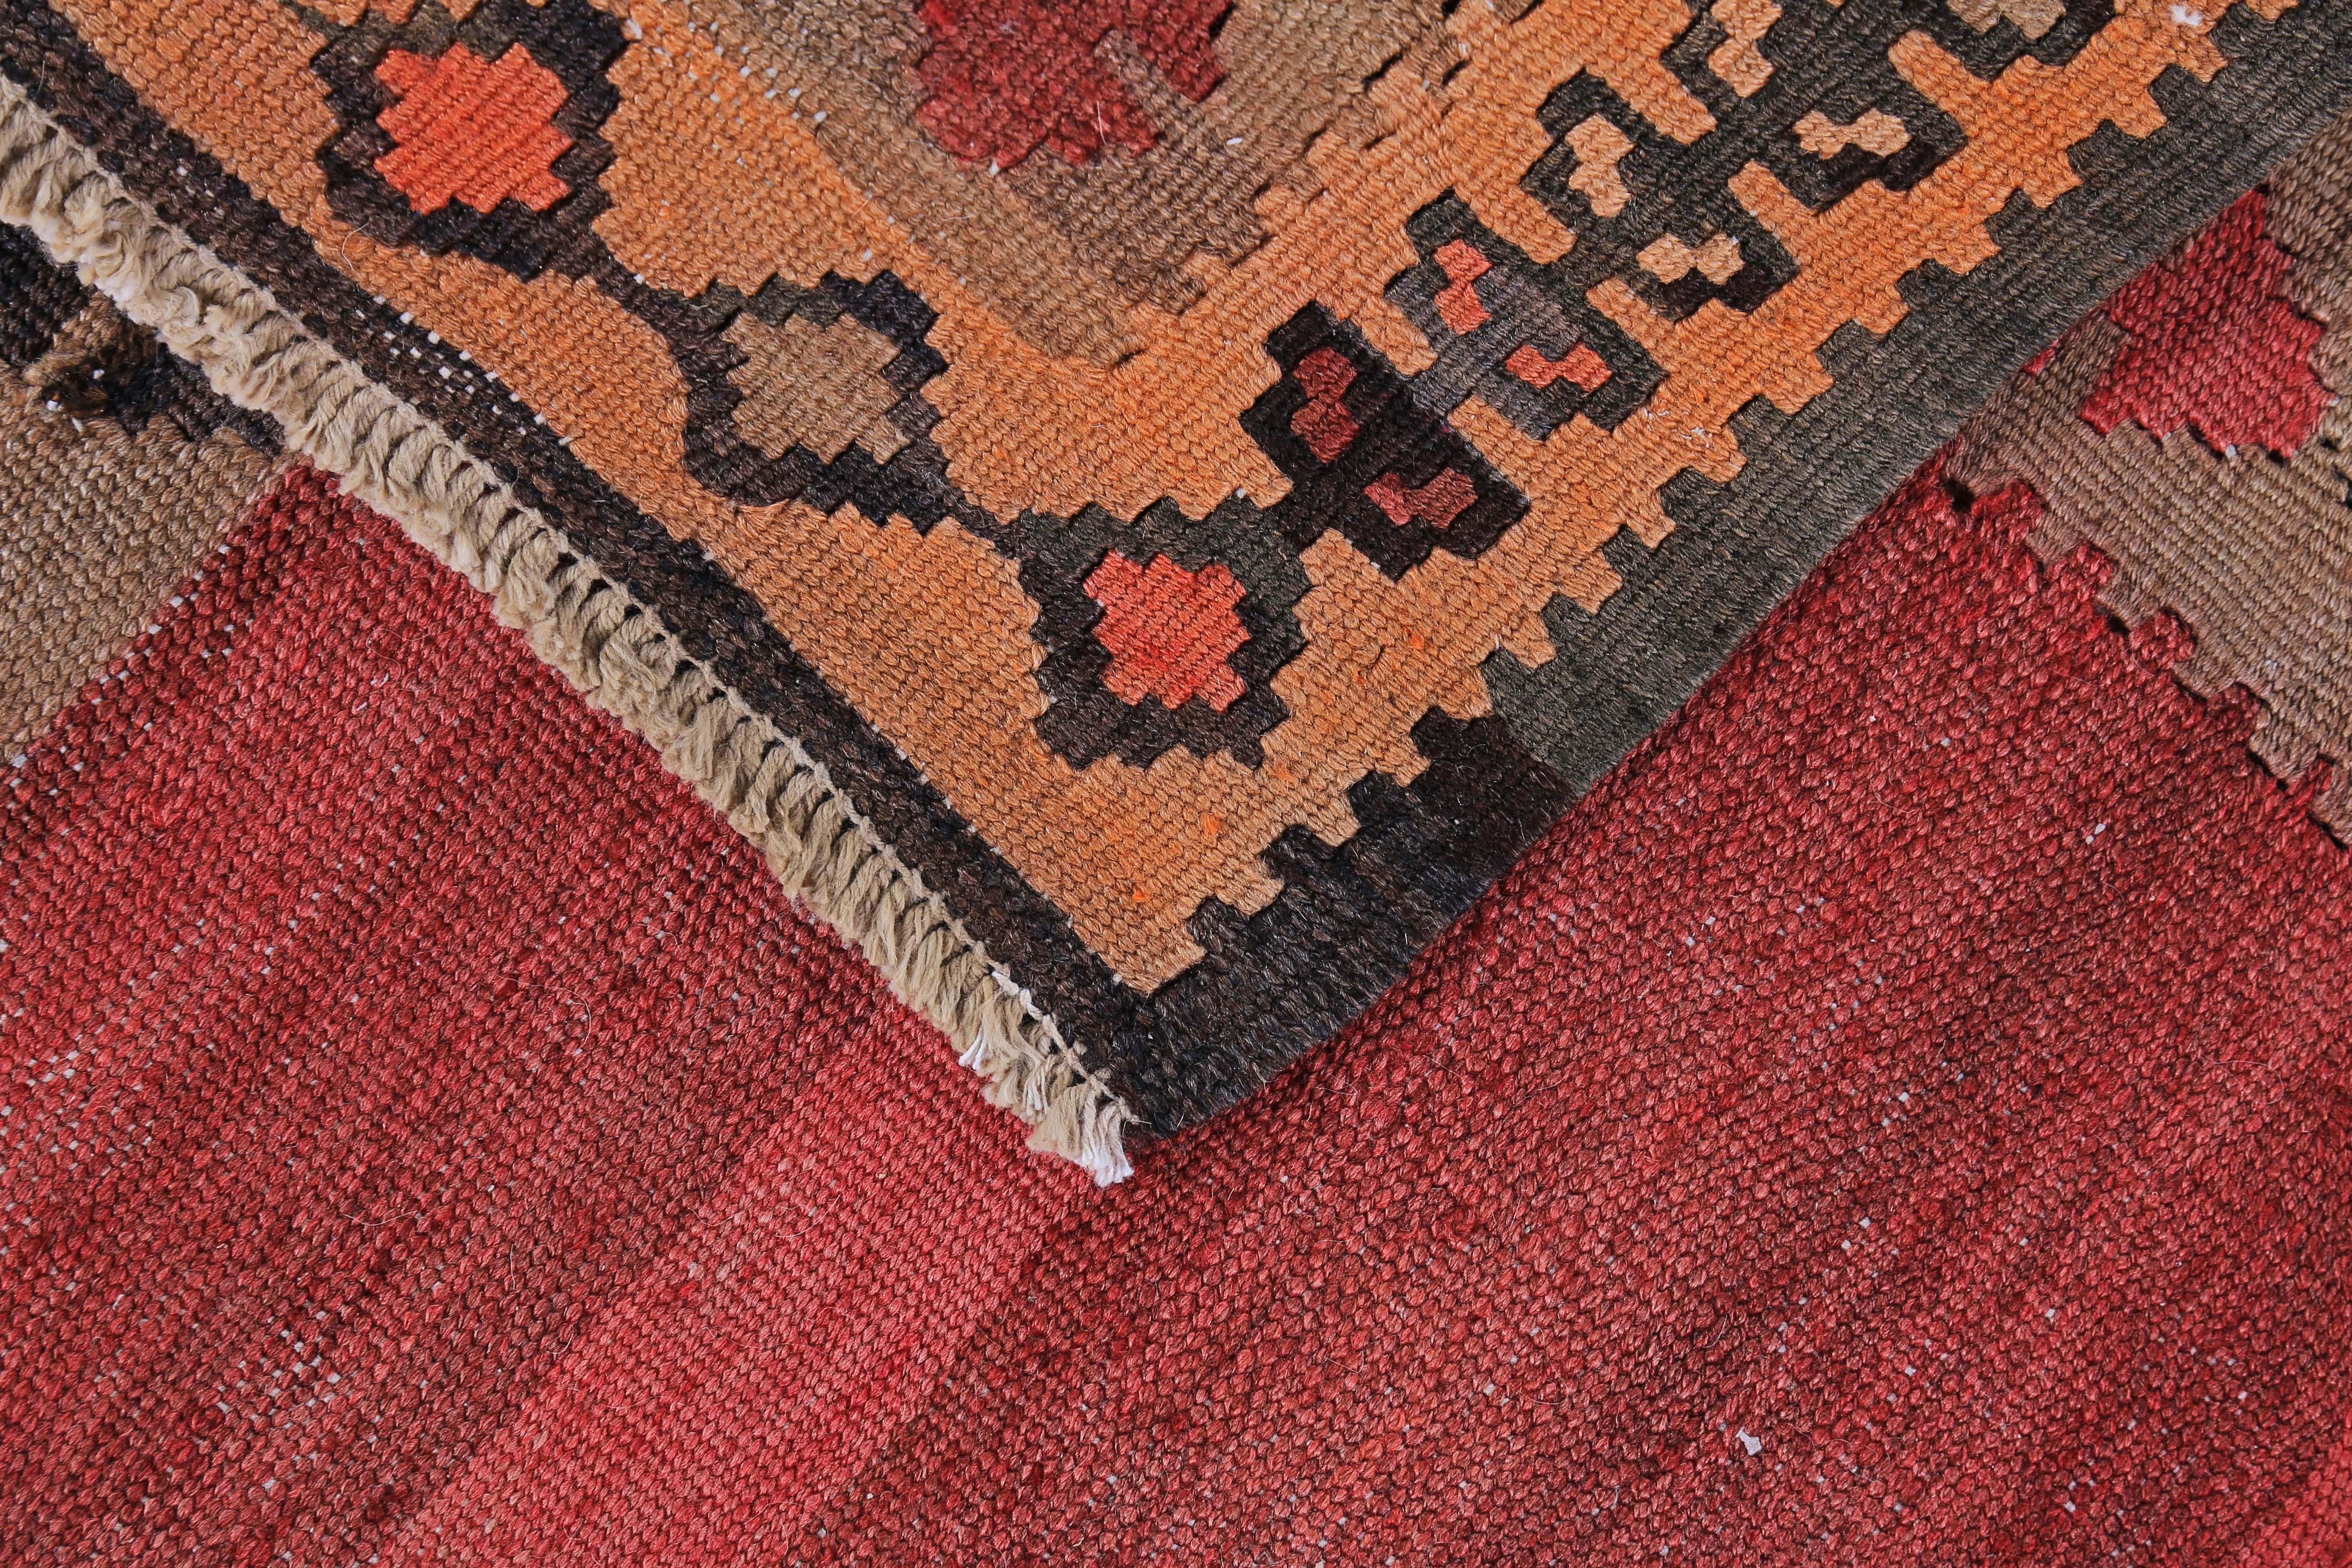 Wool Modern Turkish Kilim Rug with Black and Red Tribal Diamonds on Orange Field For Sale